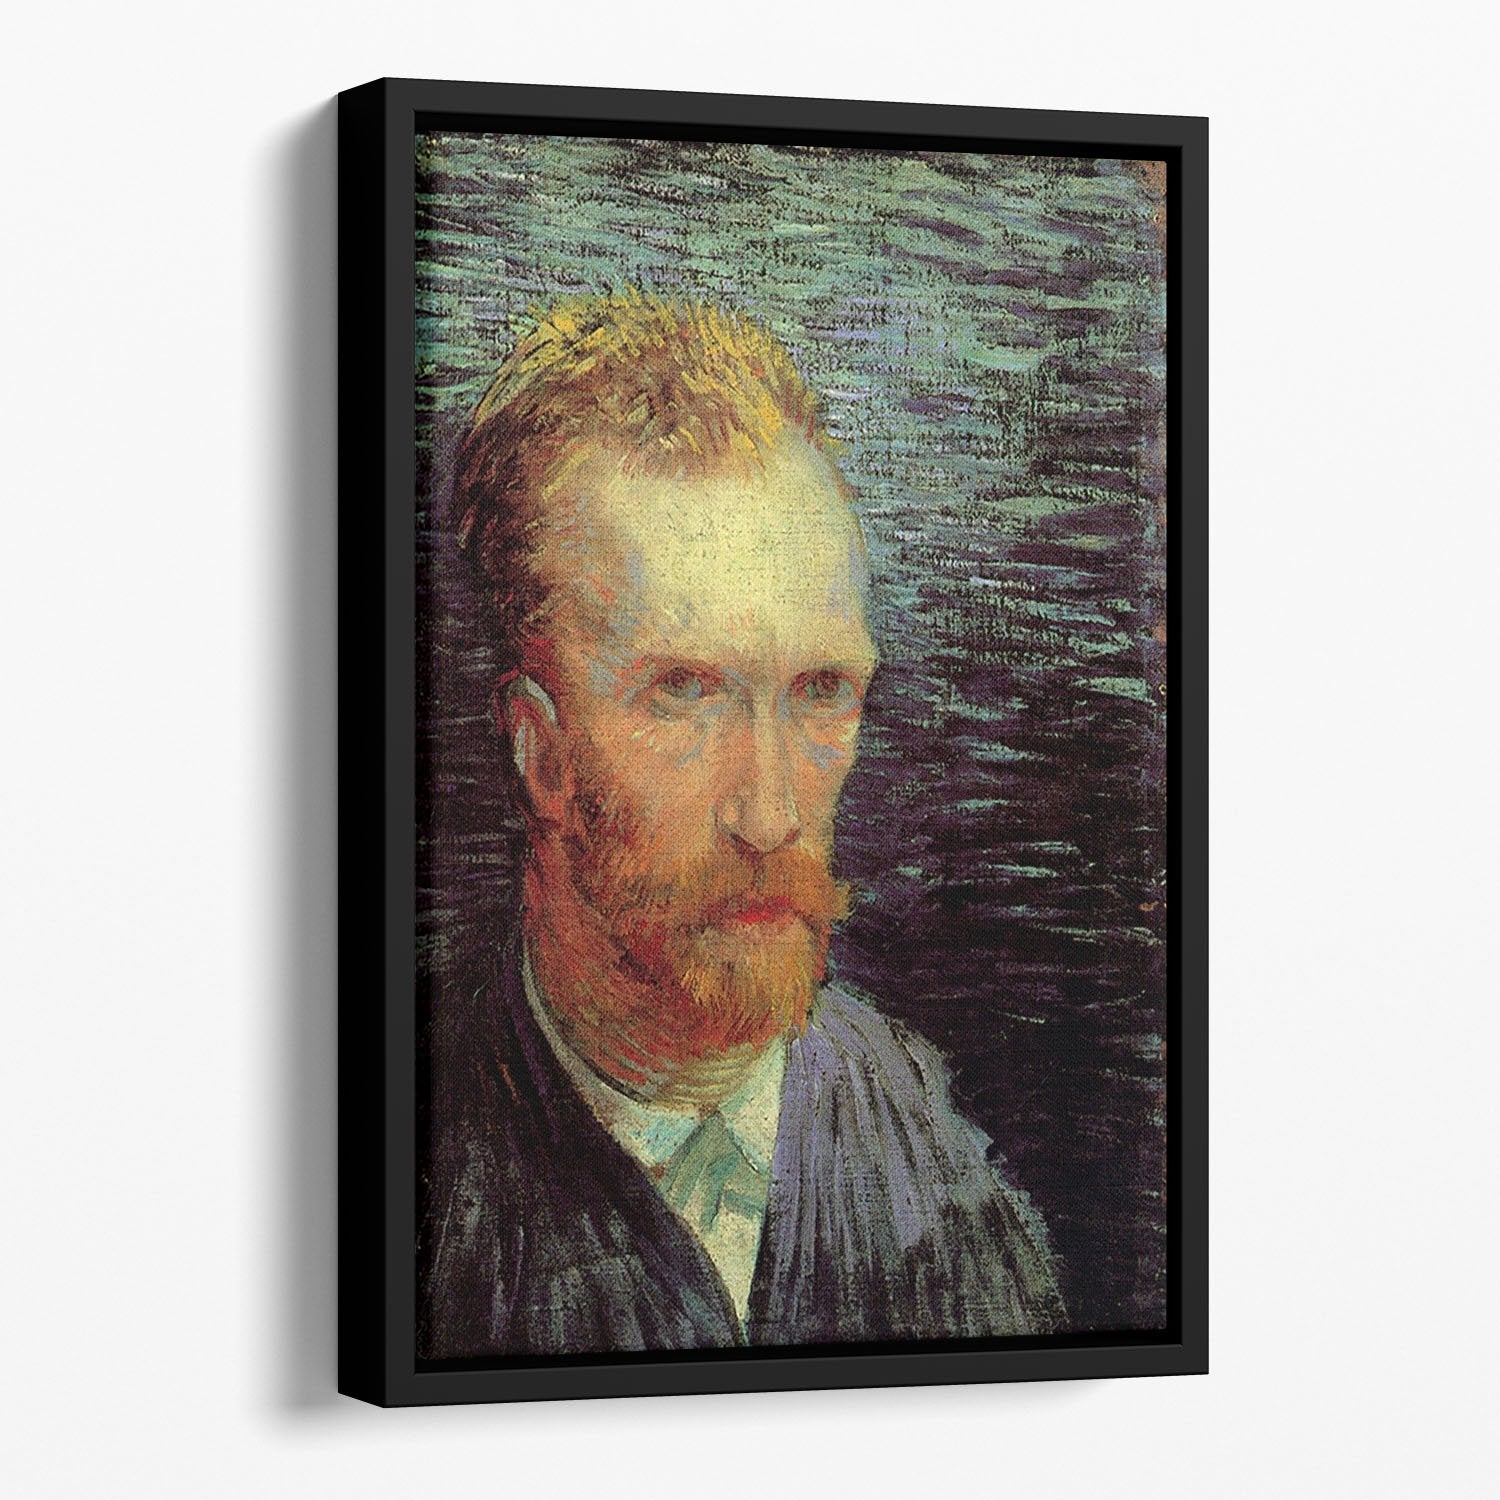 Self-Portrait 7 by Van Gogh Floating Framed Canvas